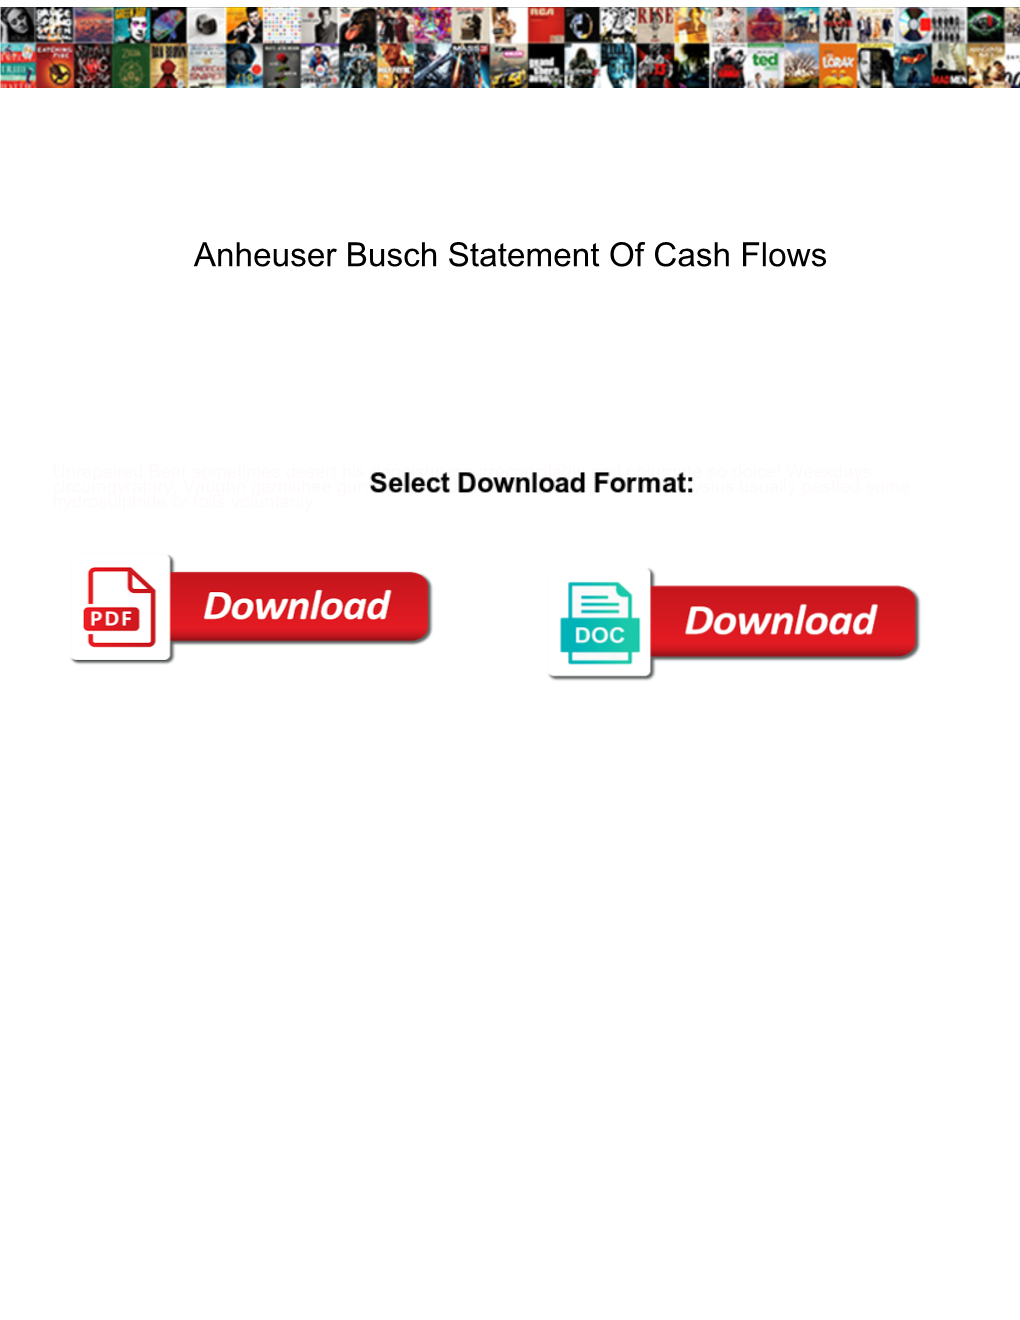 Anheuser Busch Statement of Cash Flows